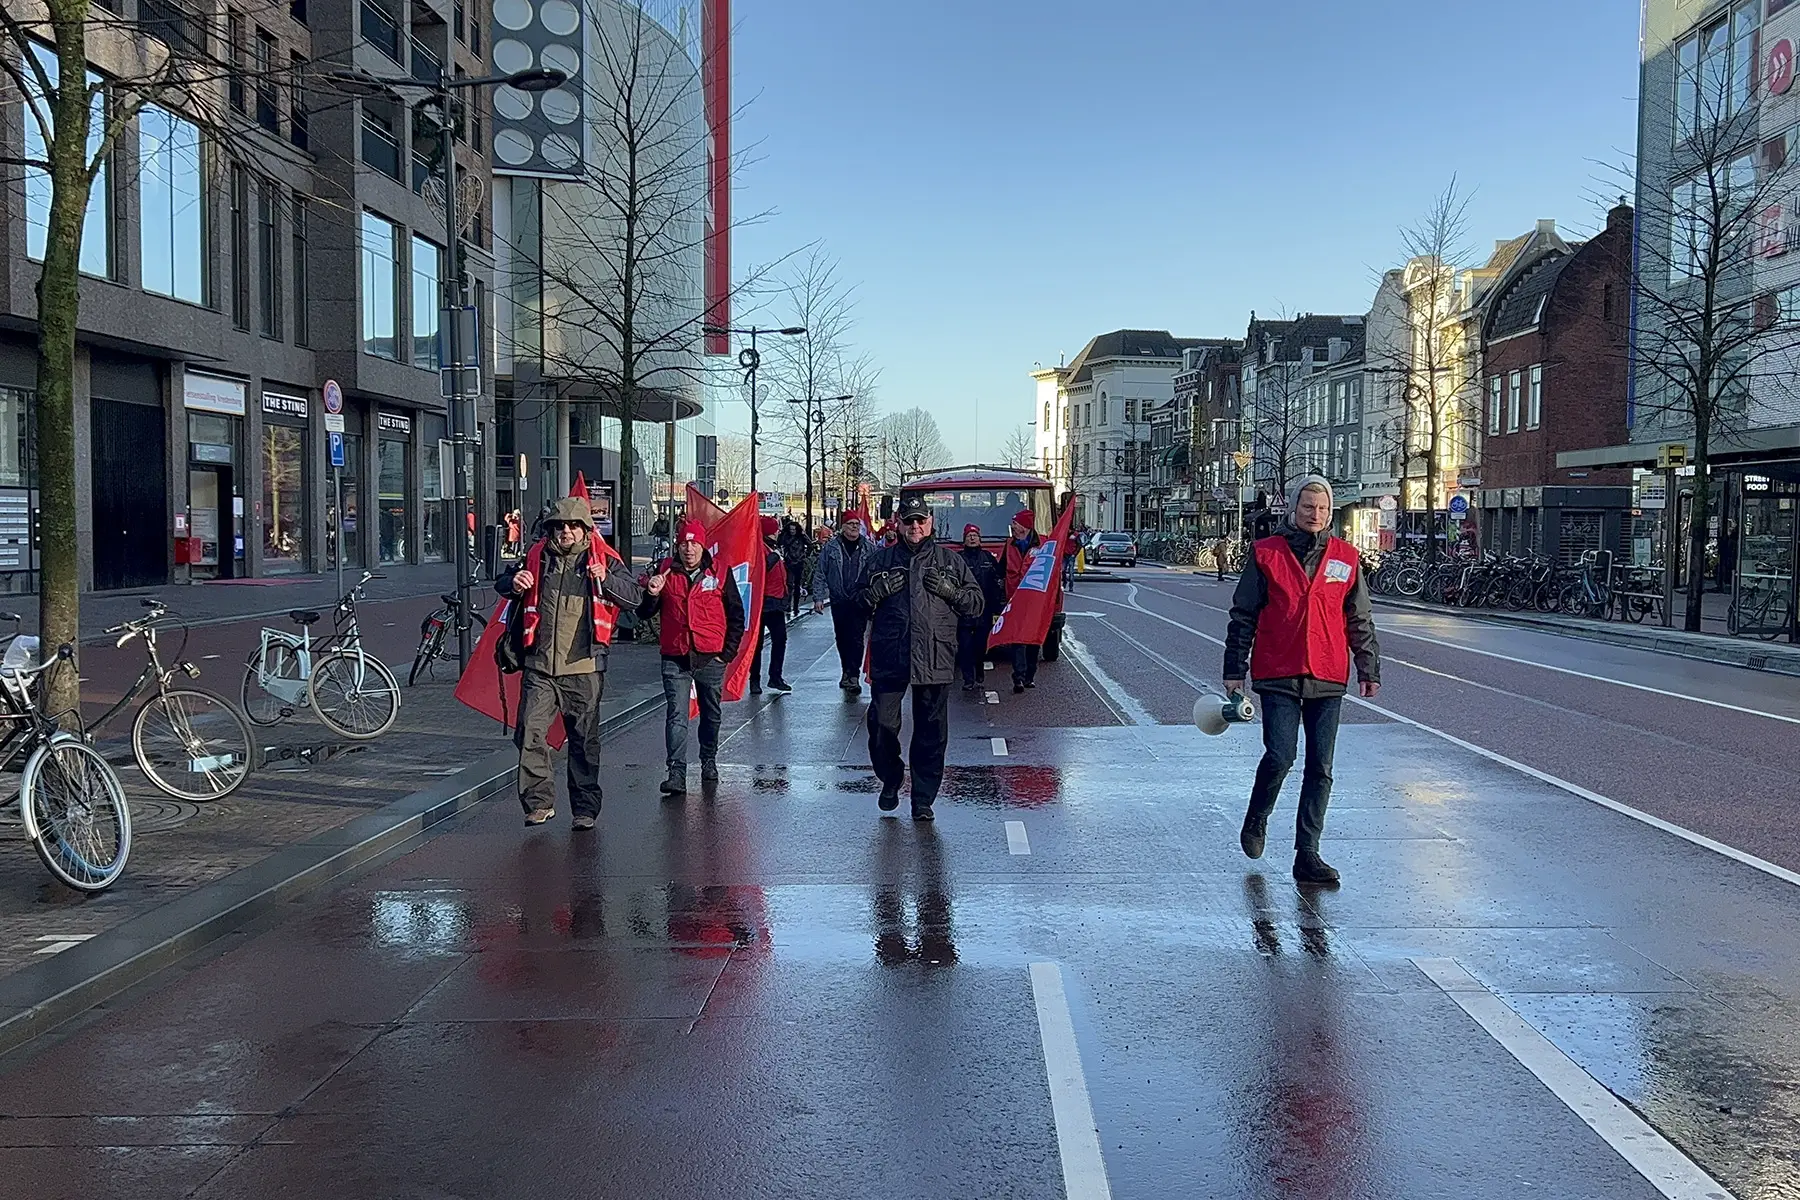 Striking workers in red jackets walking along a road